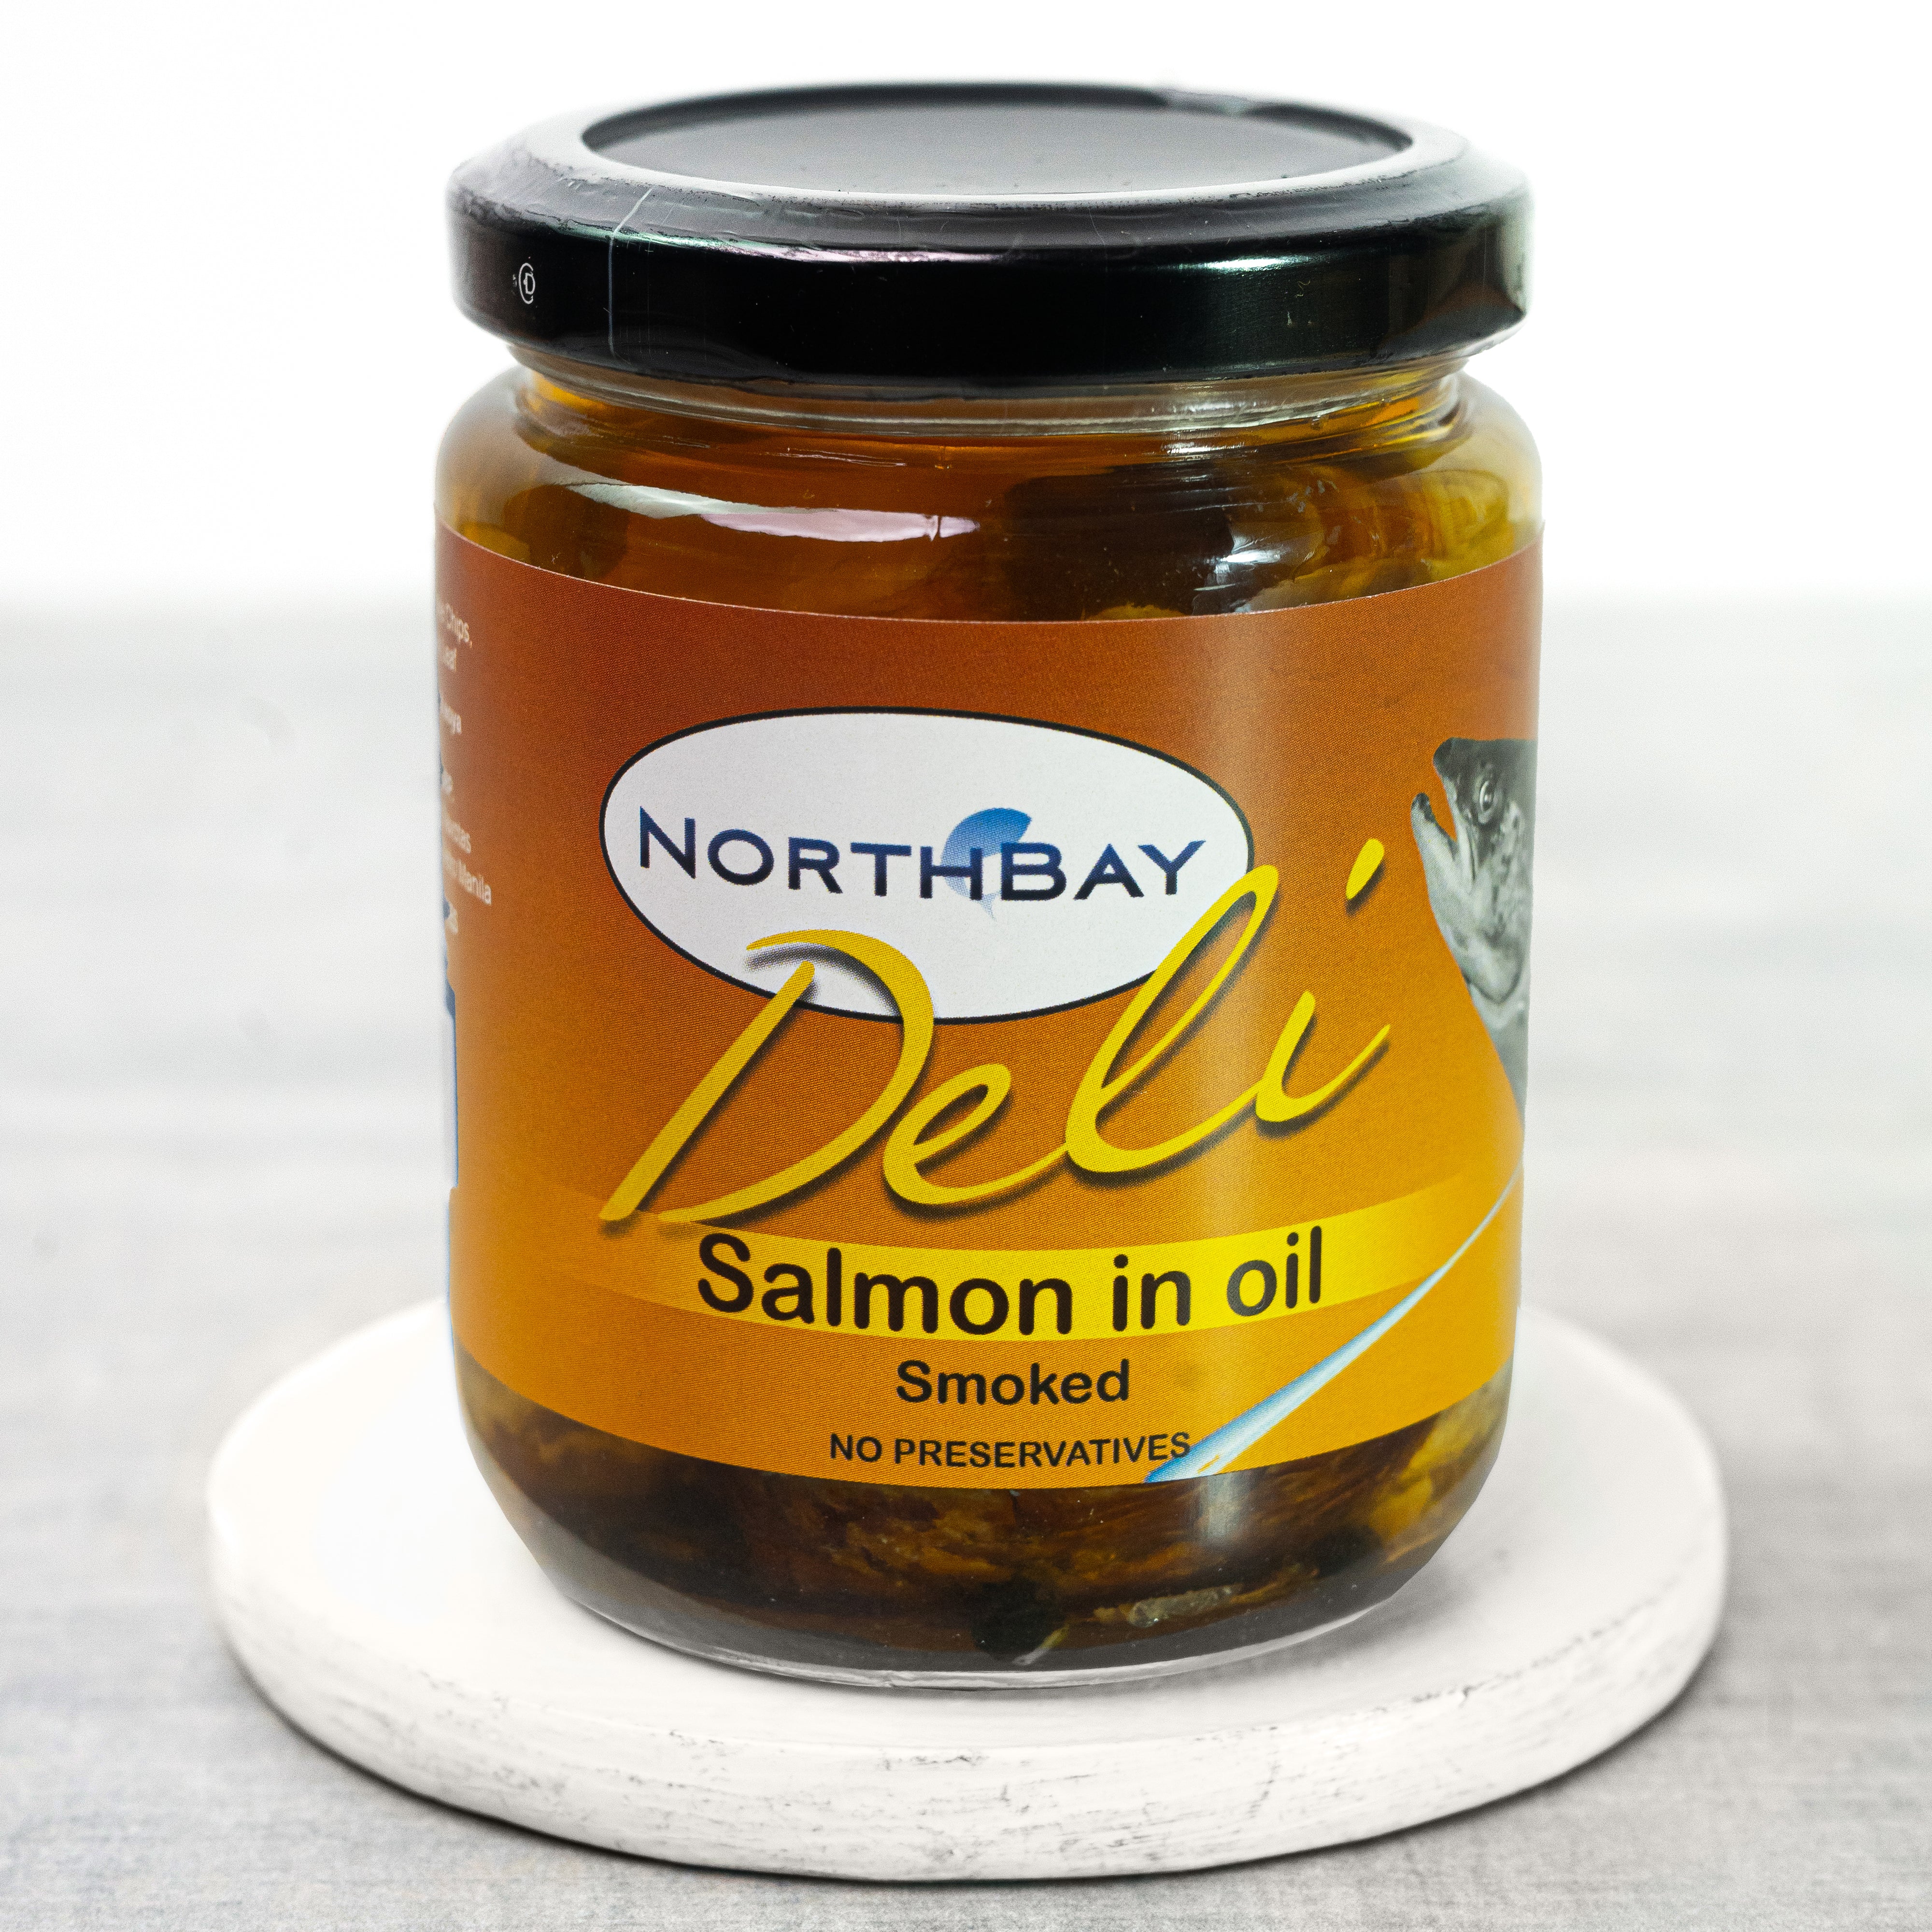 Northbay Deli Salmon in Oil Smoked